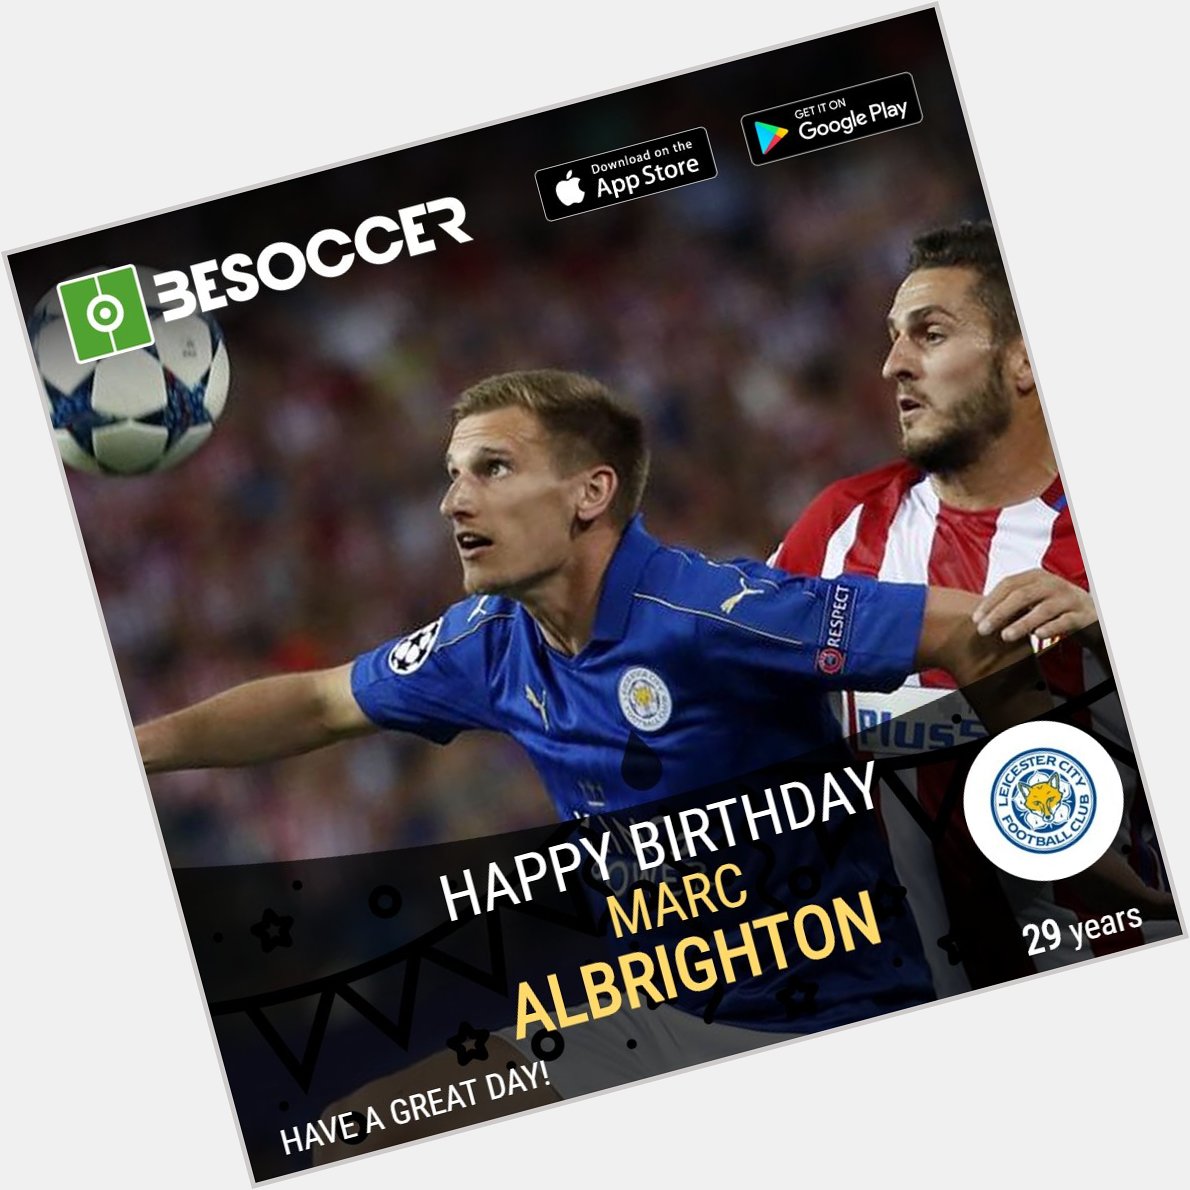 Happy birthday to midfielder Marc Albrighton!   